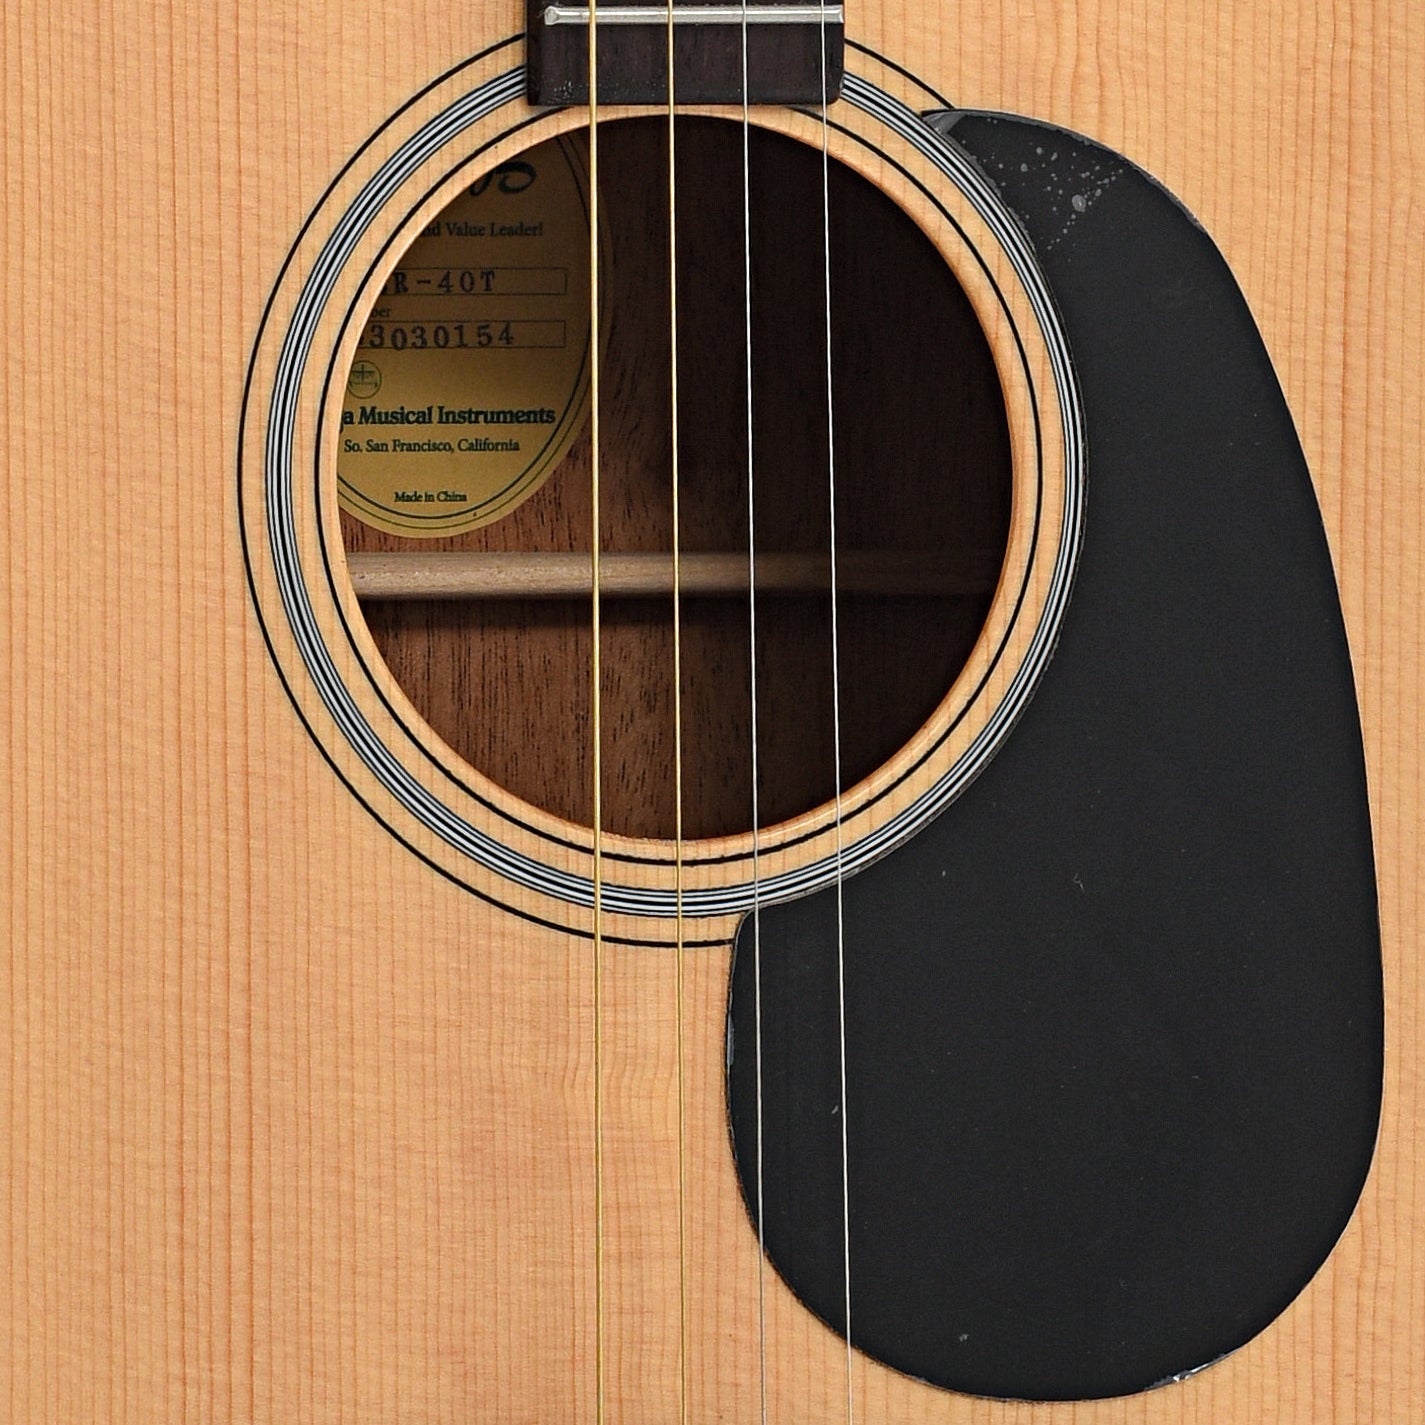 Sound hole and pickguard of Blueridge BR-40T Tenor Guitar